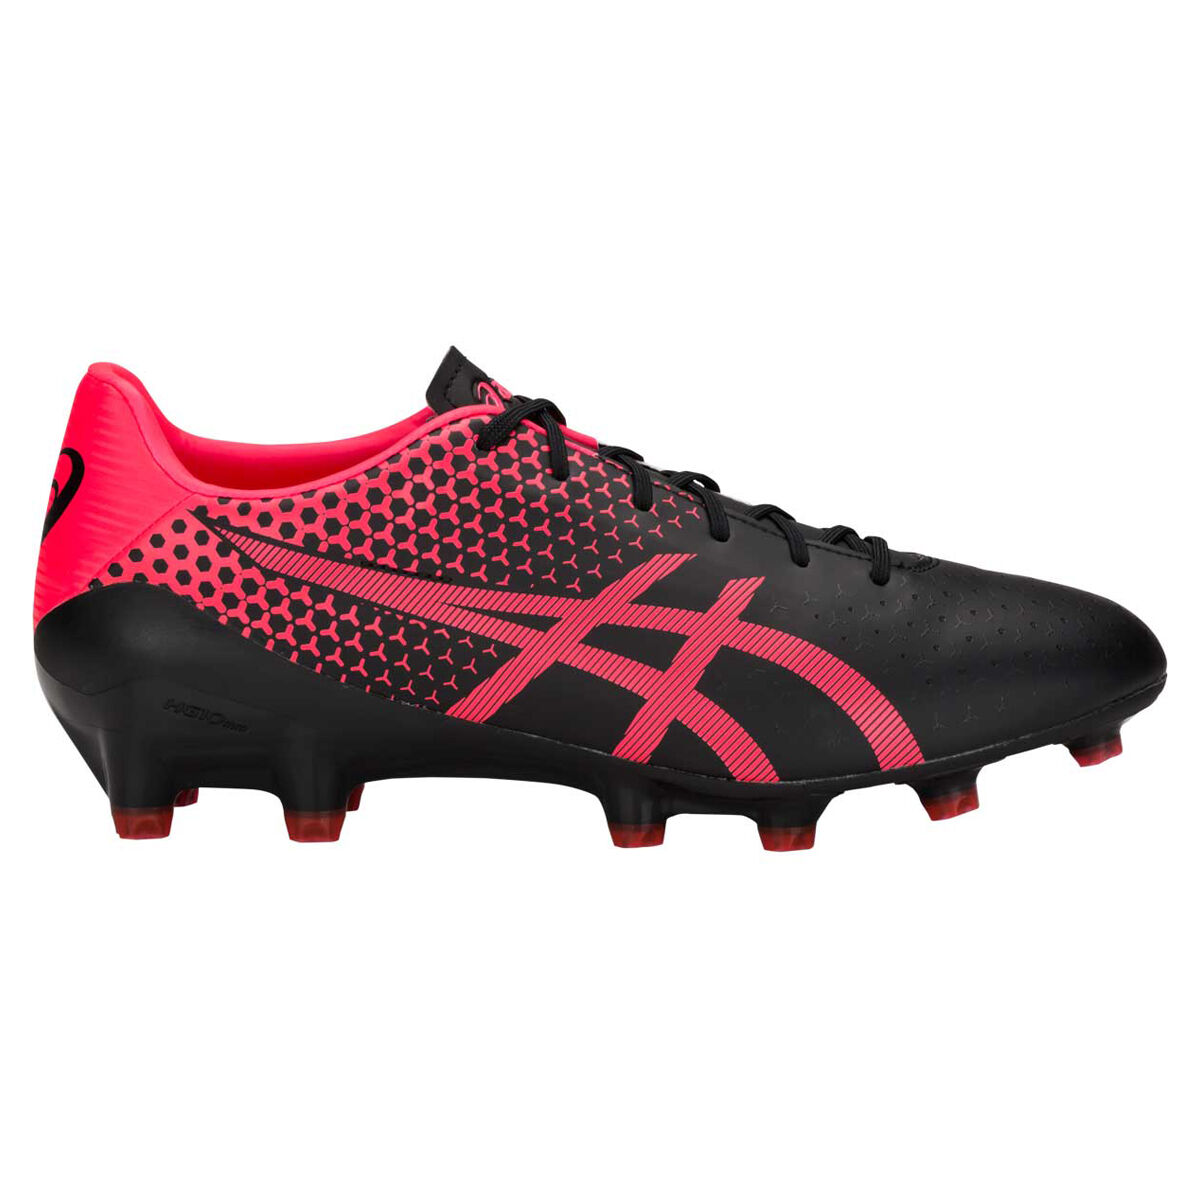 asics football boots online store - 56 